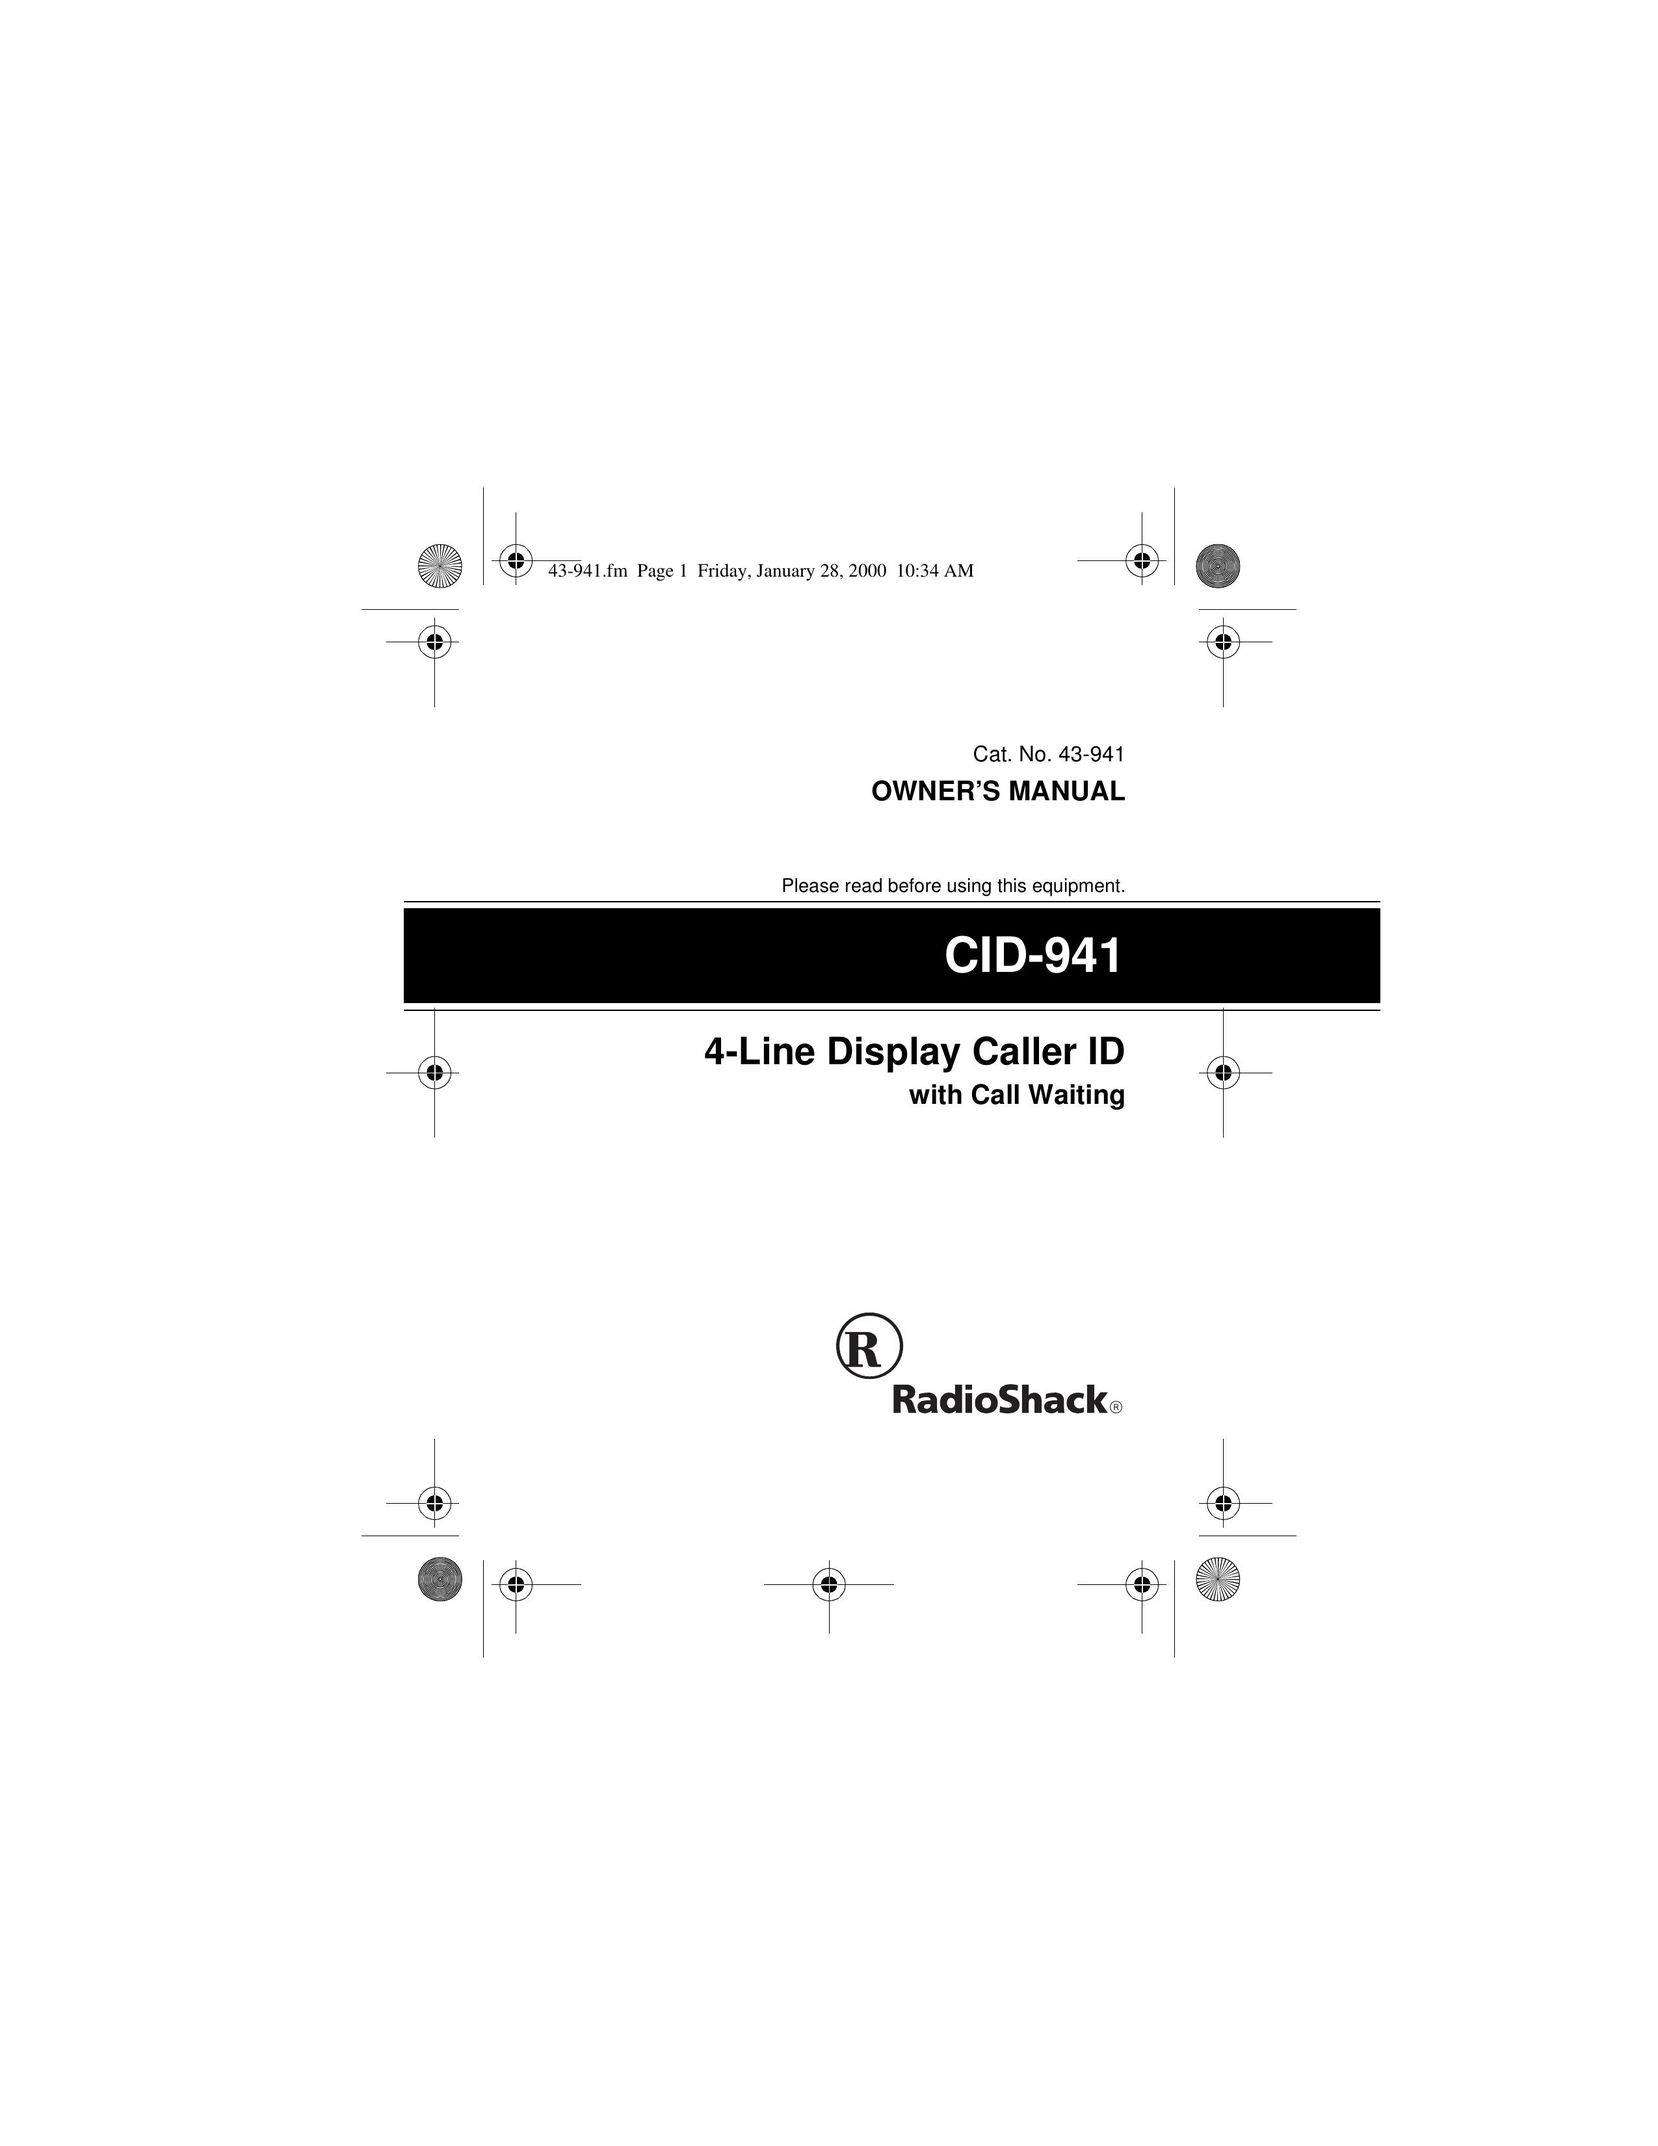 Radio Shack CID-941 Caller ID Box User Manual